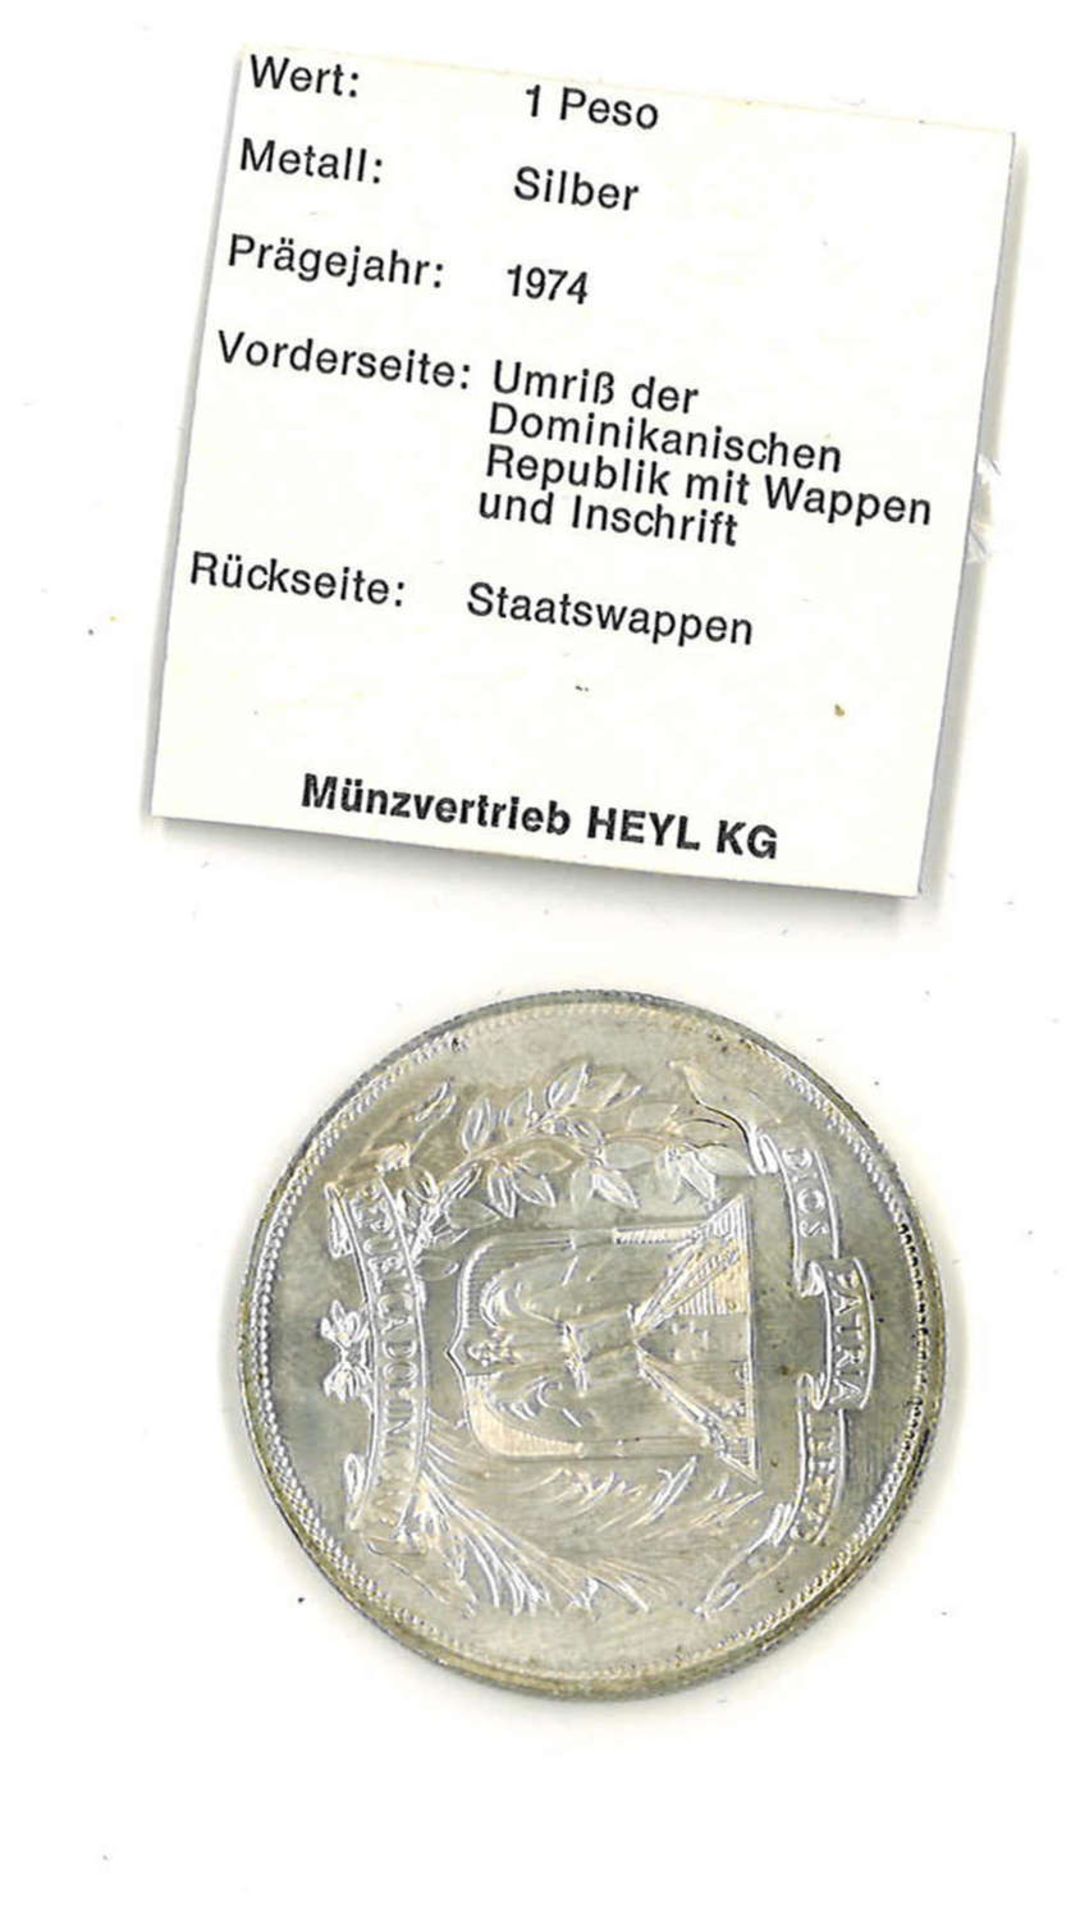 Dominikanische Republik Silbermünze. 1 Peso 1974. Karibische SpieleDominican Republic silver coin. 1